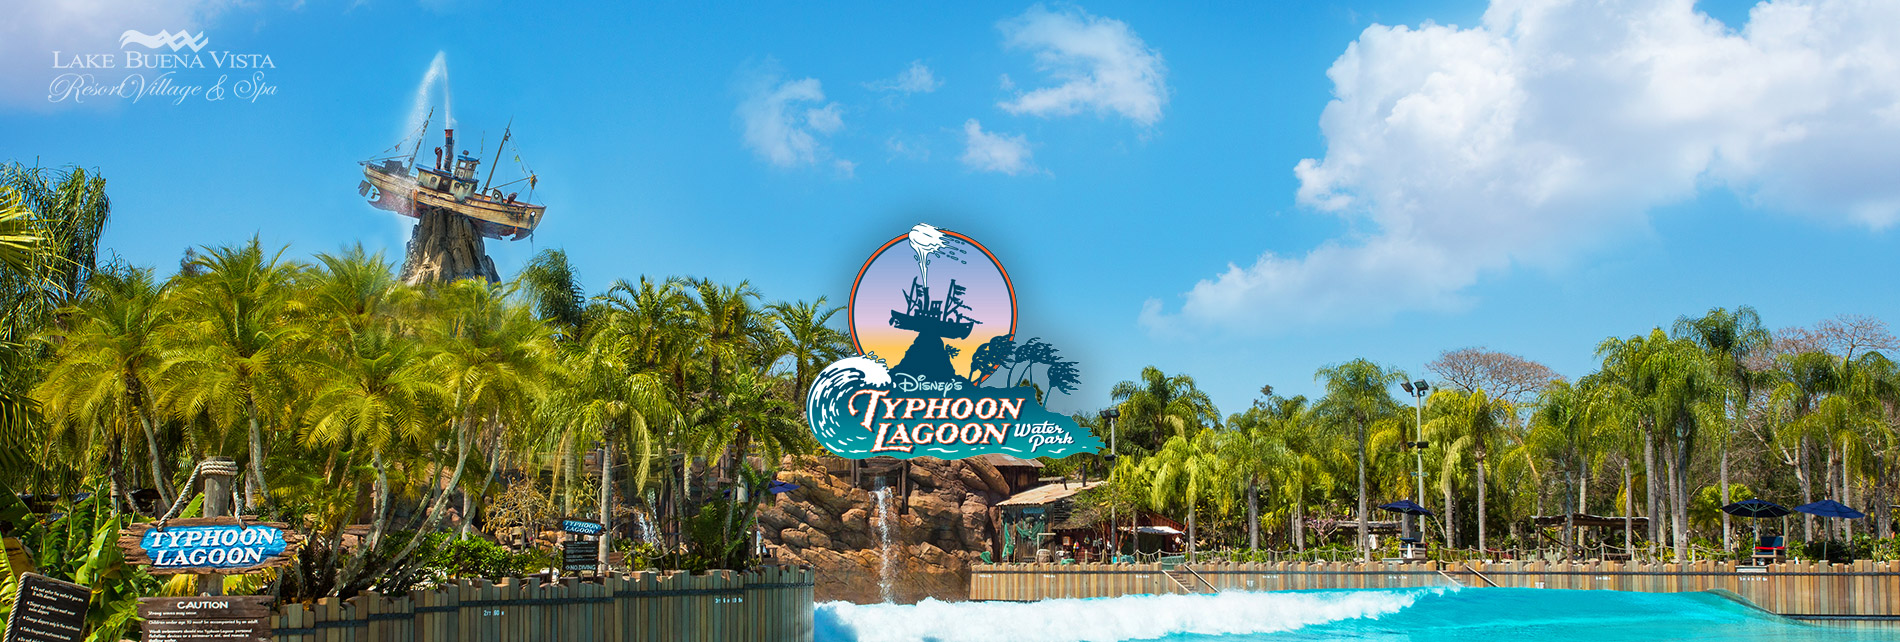 Lake Buena Vista Resort Village And Spa Disneys Typhoon Lagoon2